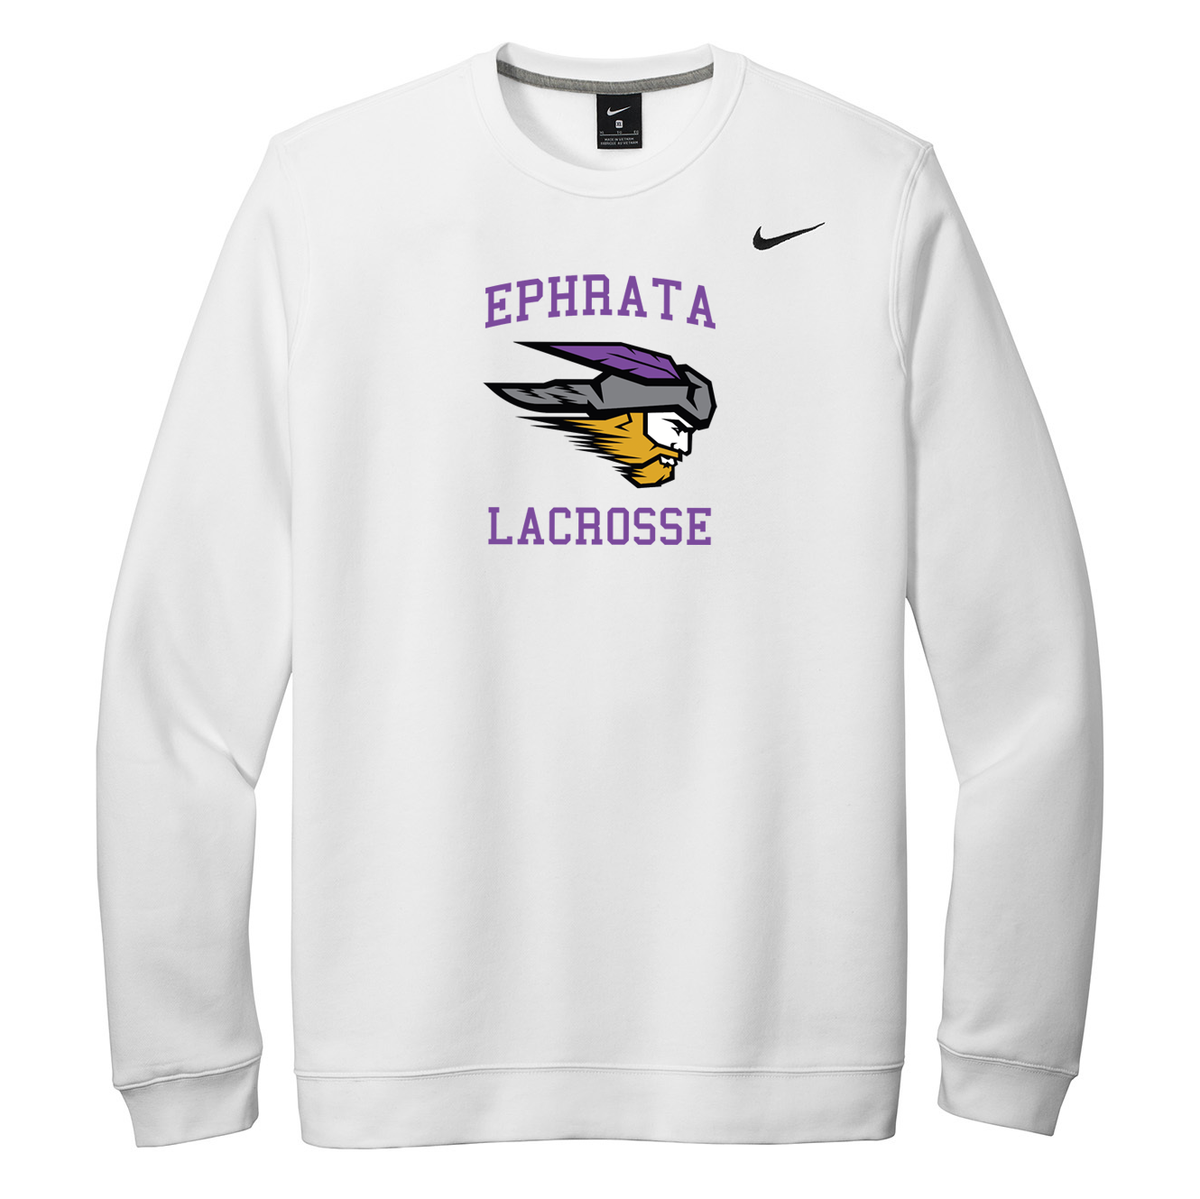 Ephrata Lacrosse Nike Fleece Crew Neck